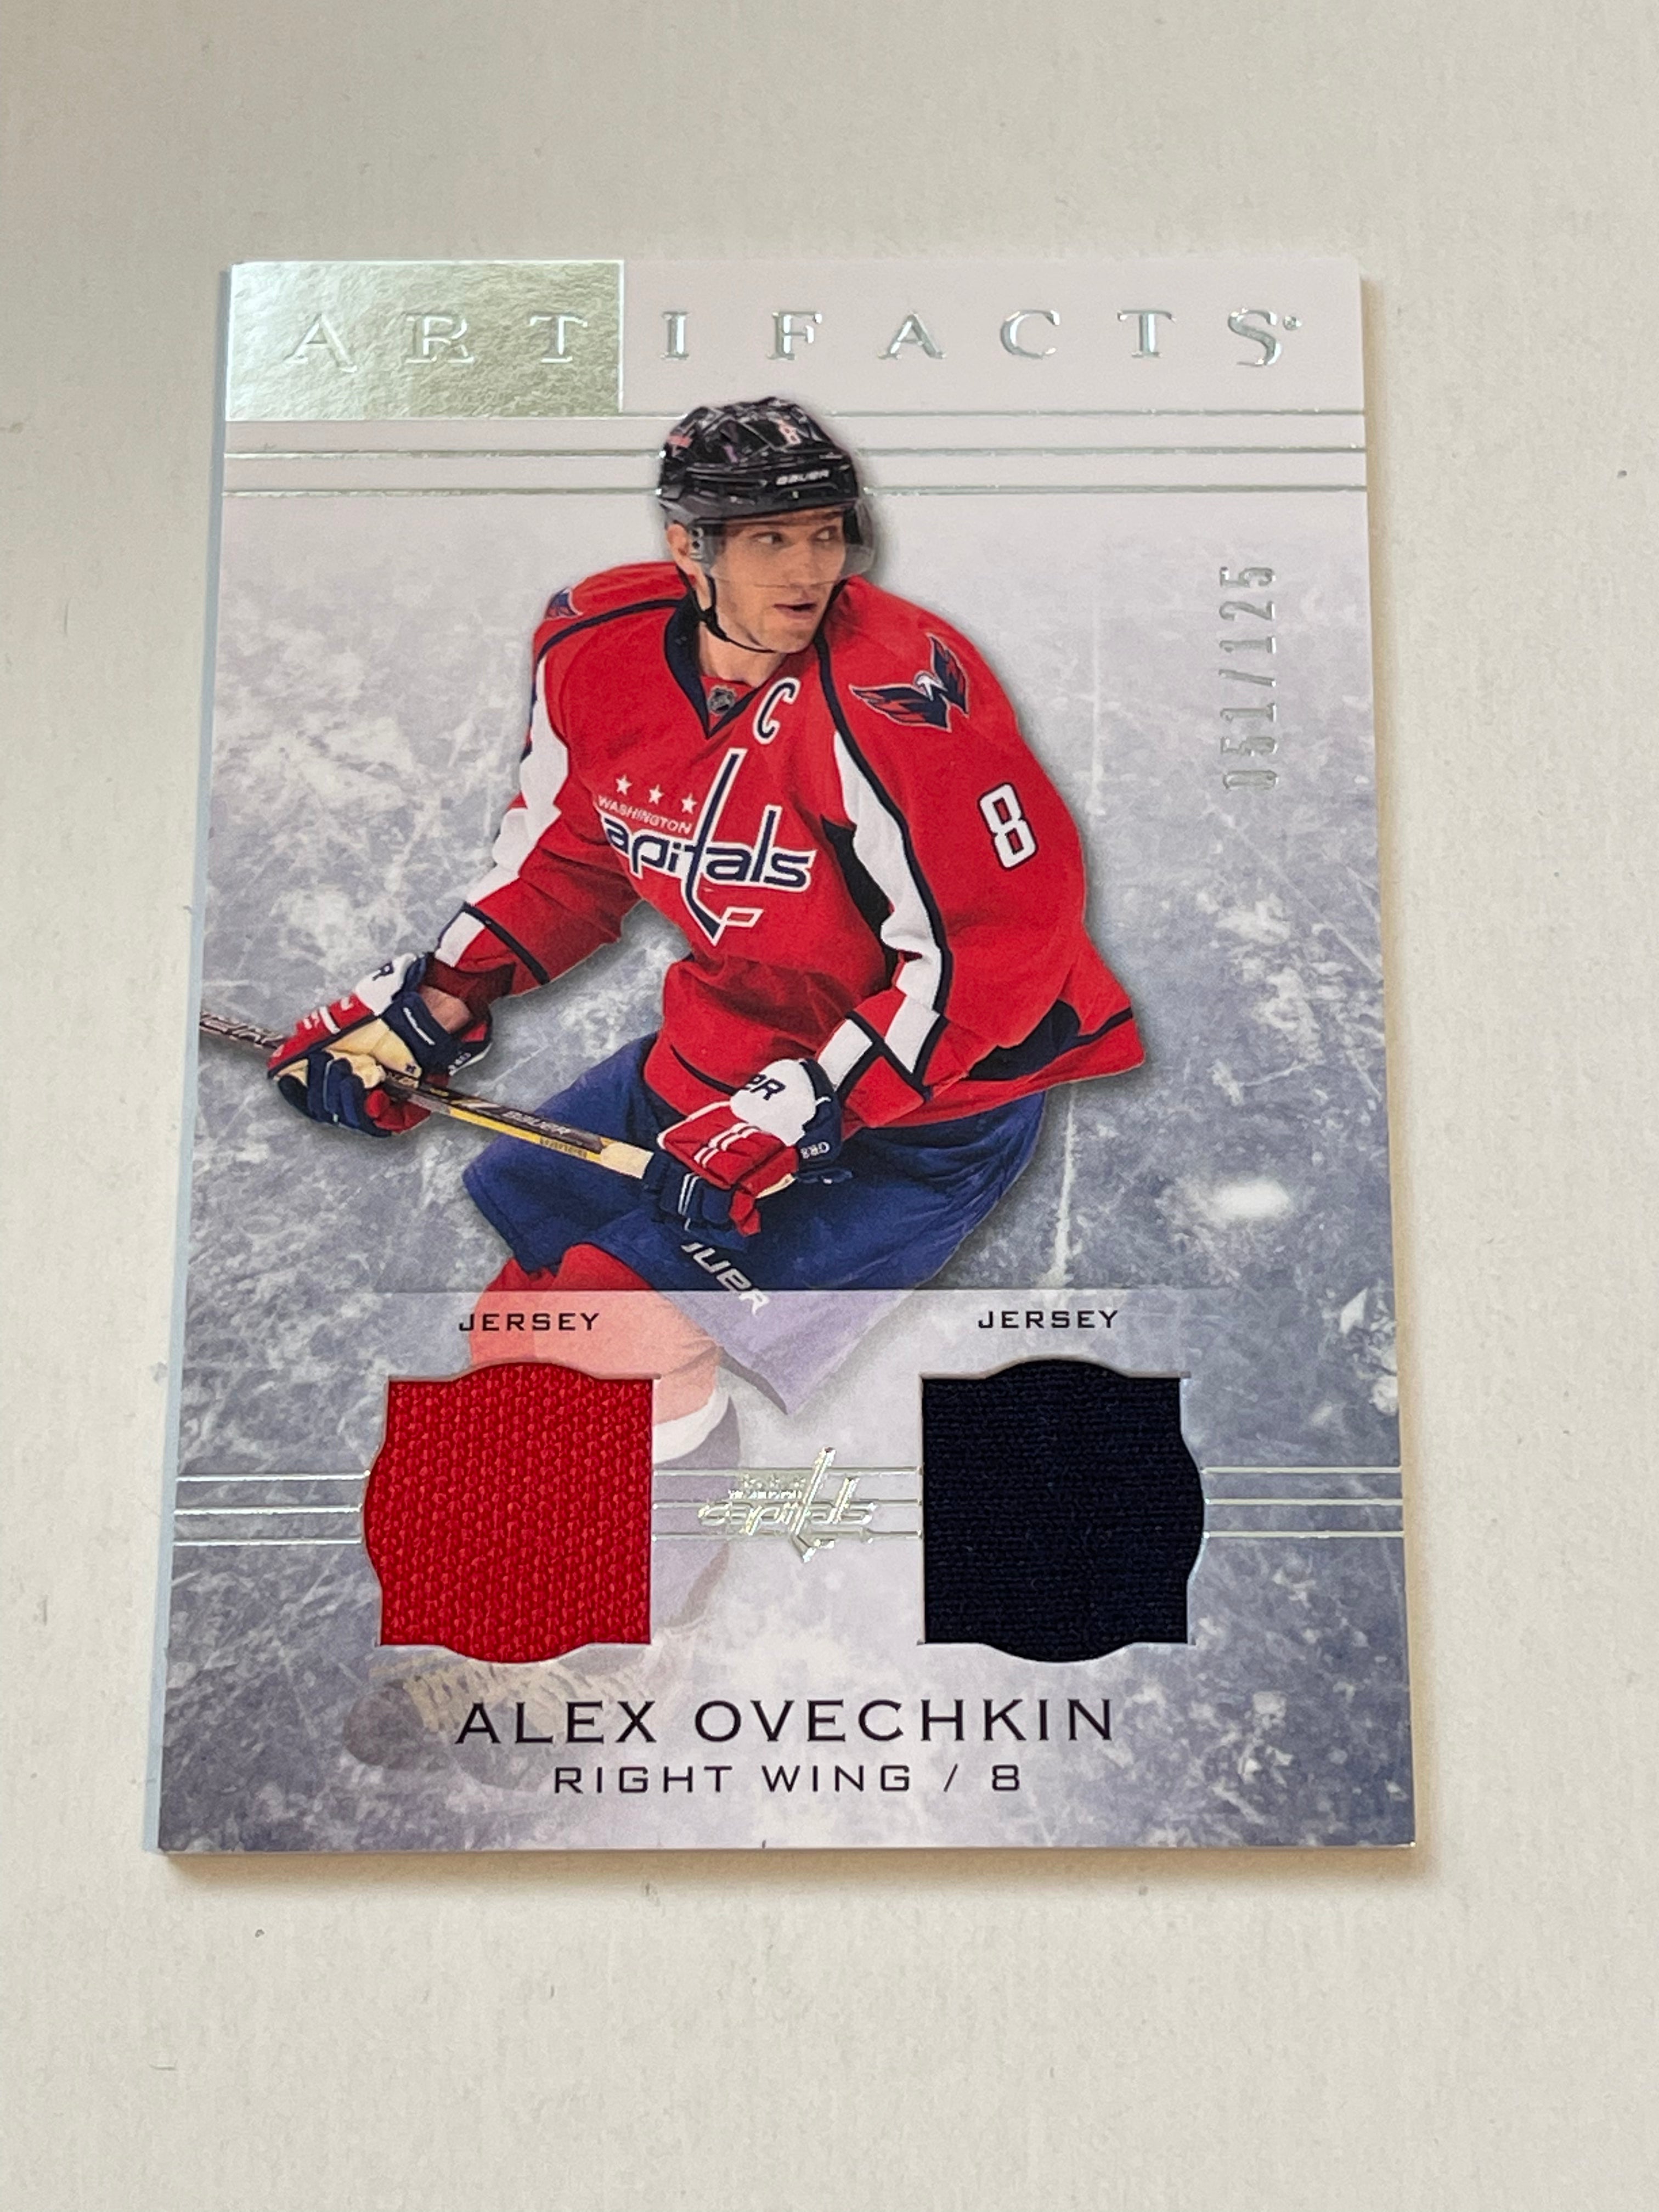 Alexander Ovechkin double memorabilia hockey insert card